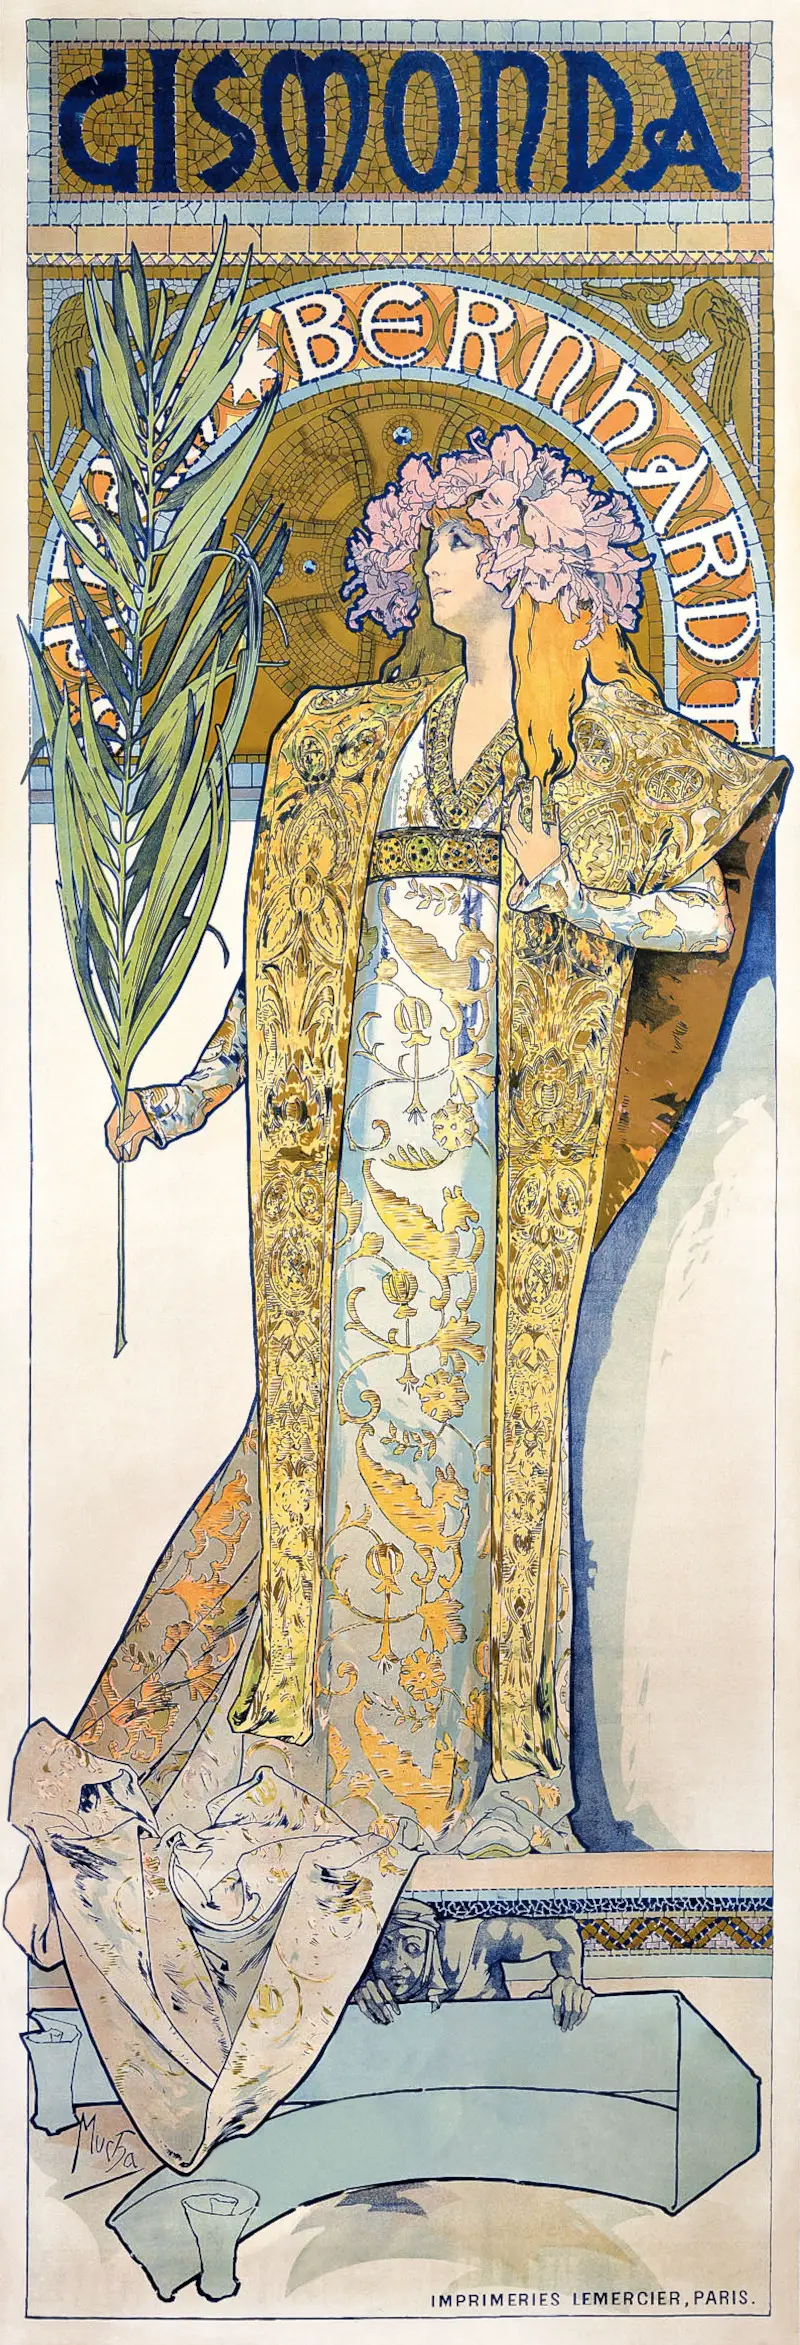 Gismonda Art Nouveau Illustration by Alphonse Mucha